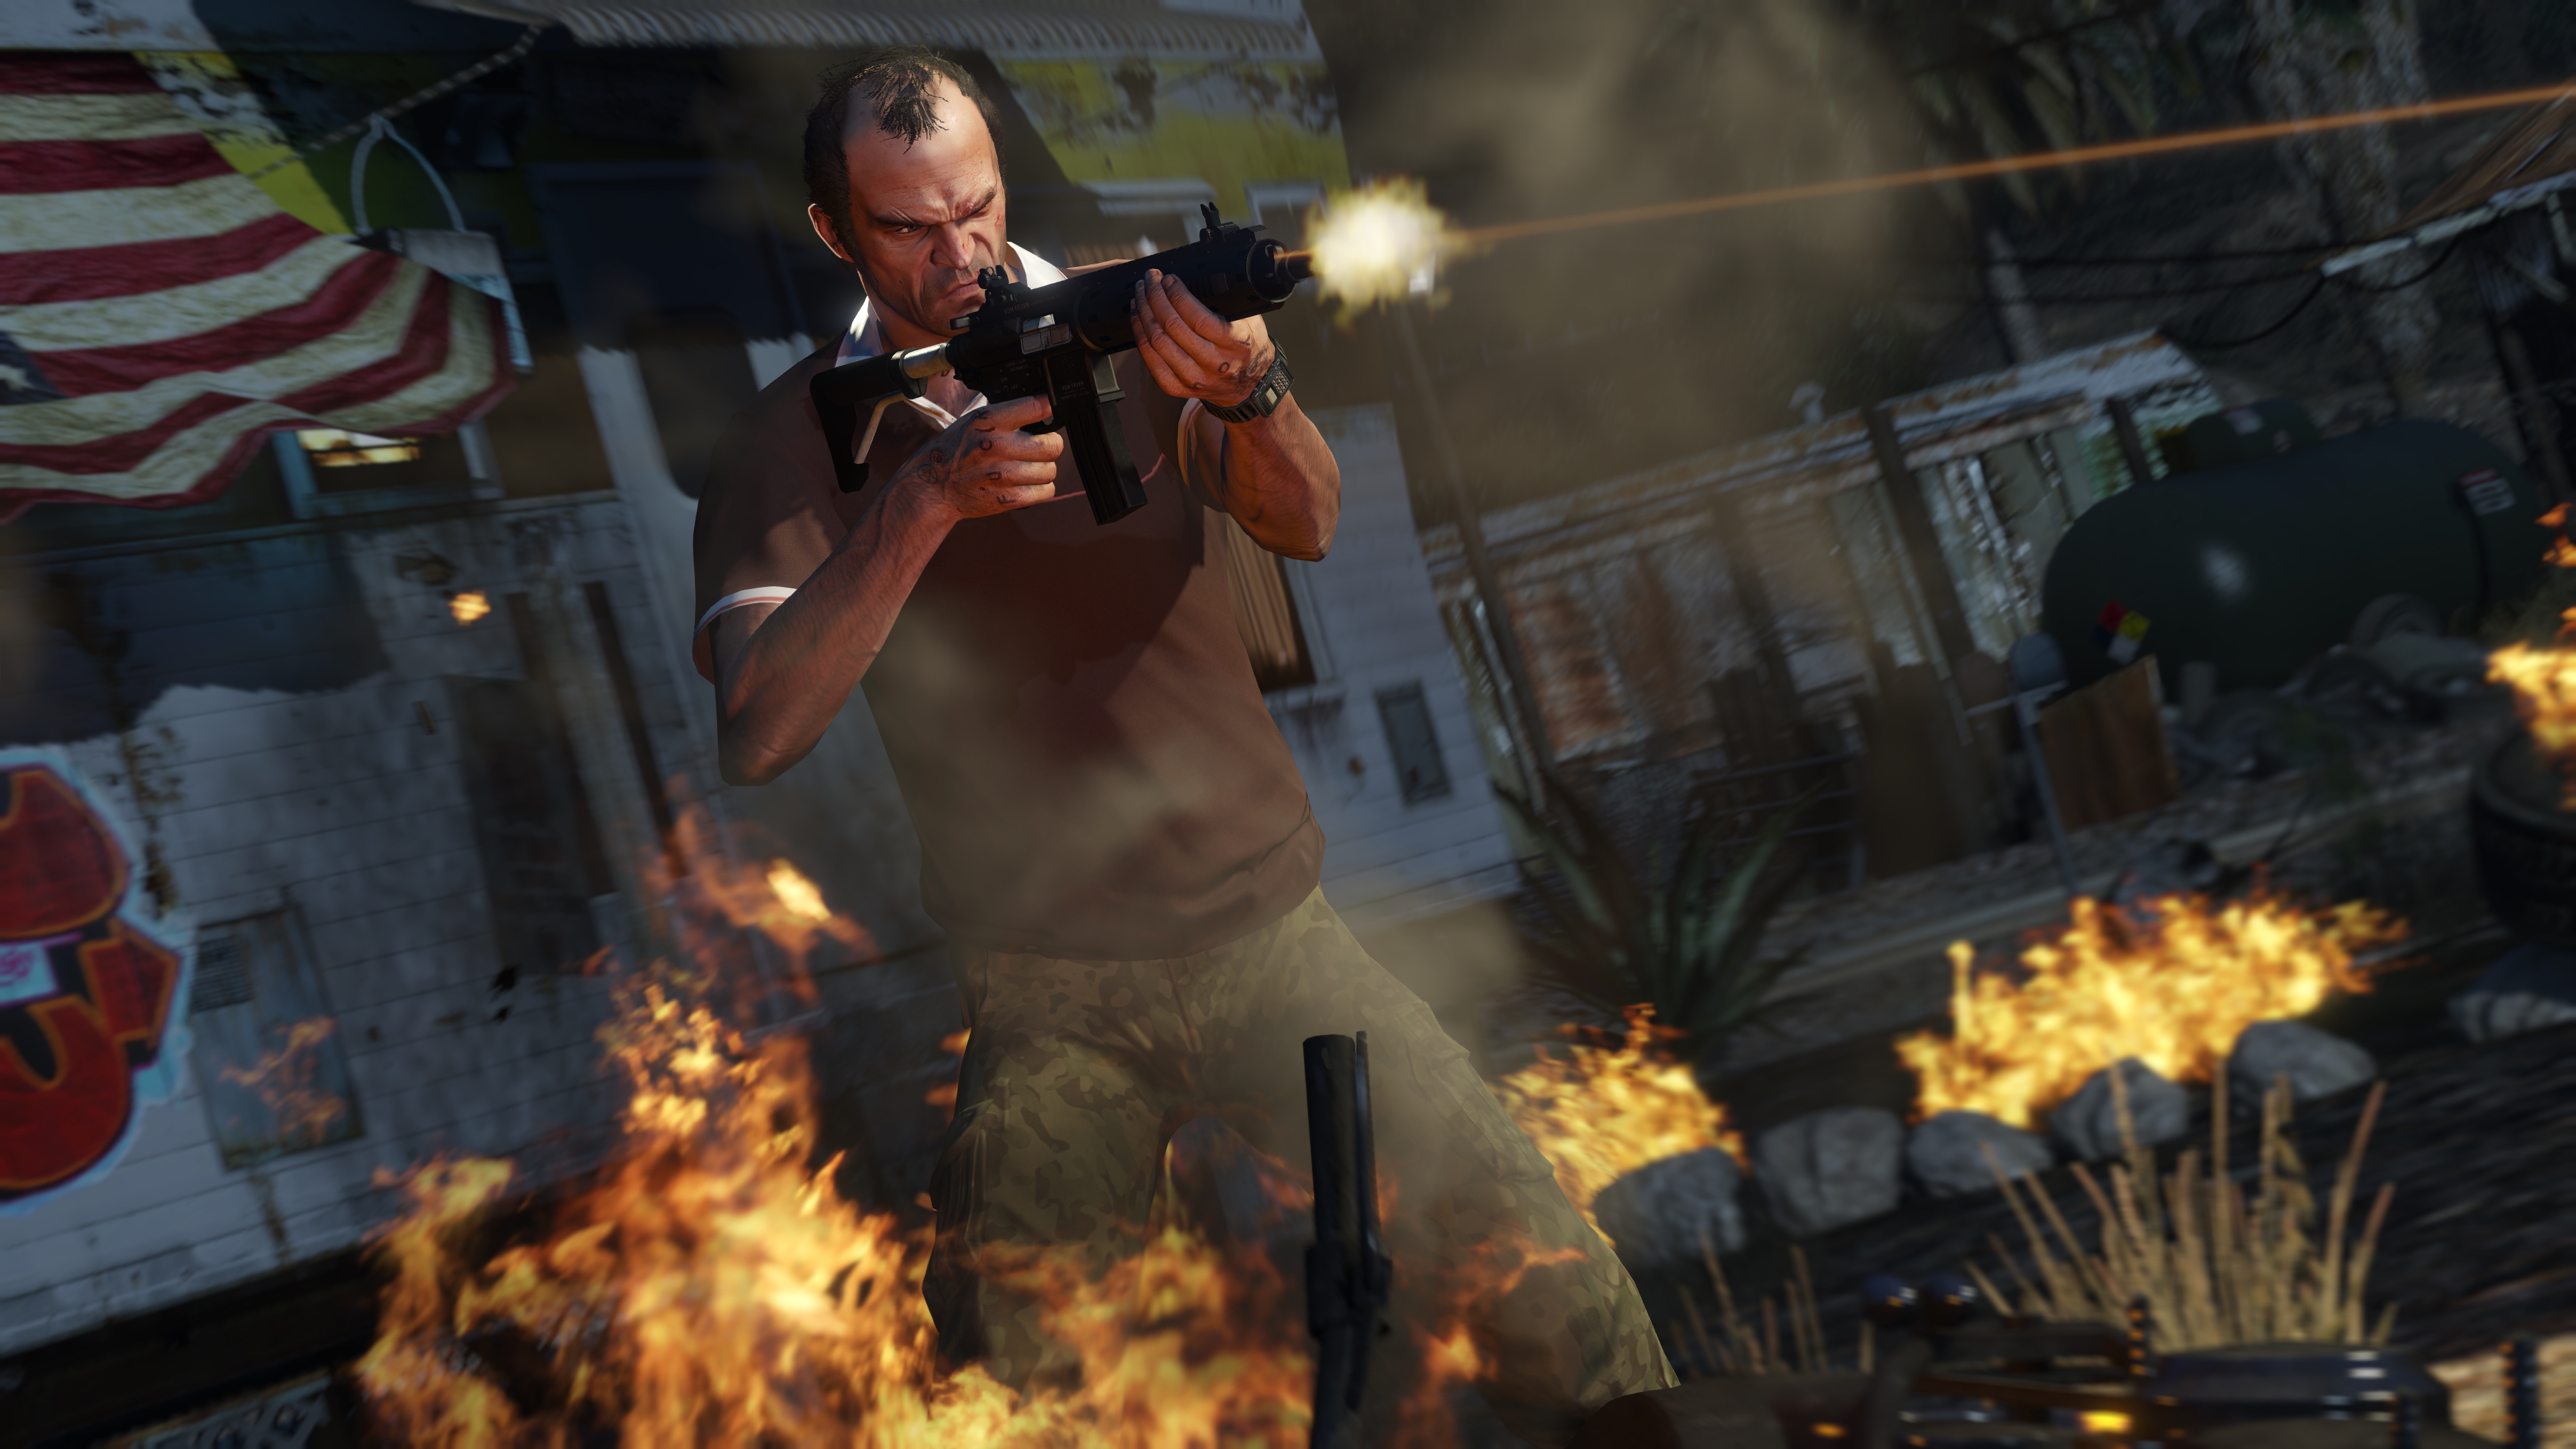 Rockstar Games turned off social media comments after GTA 6 leaks